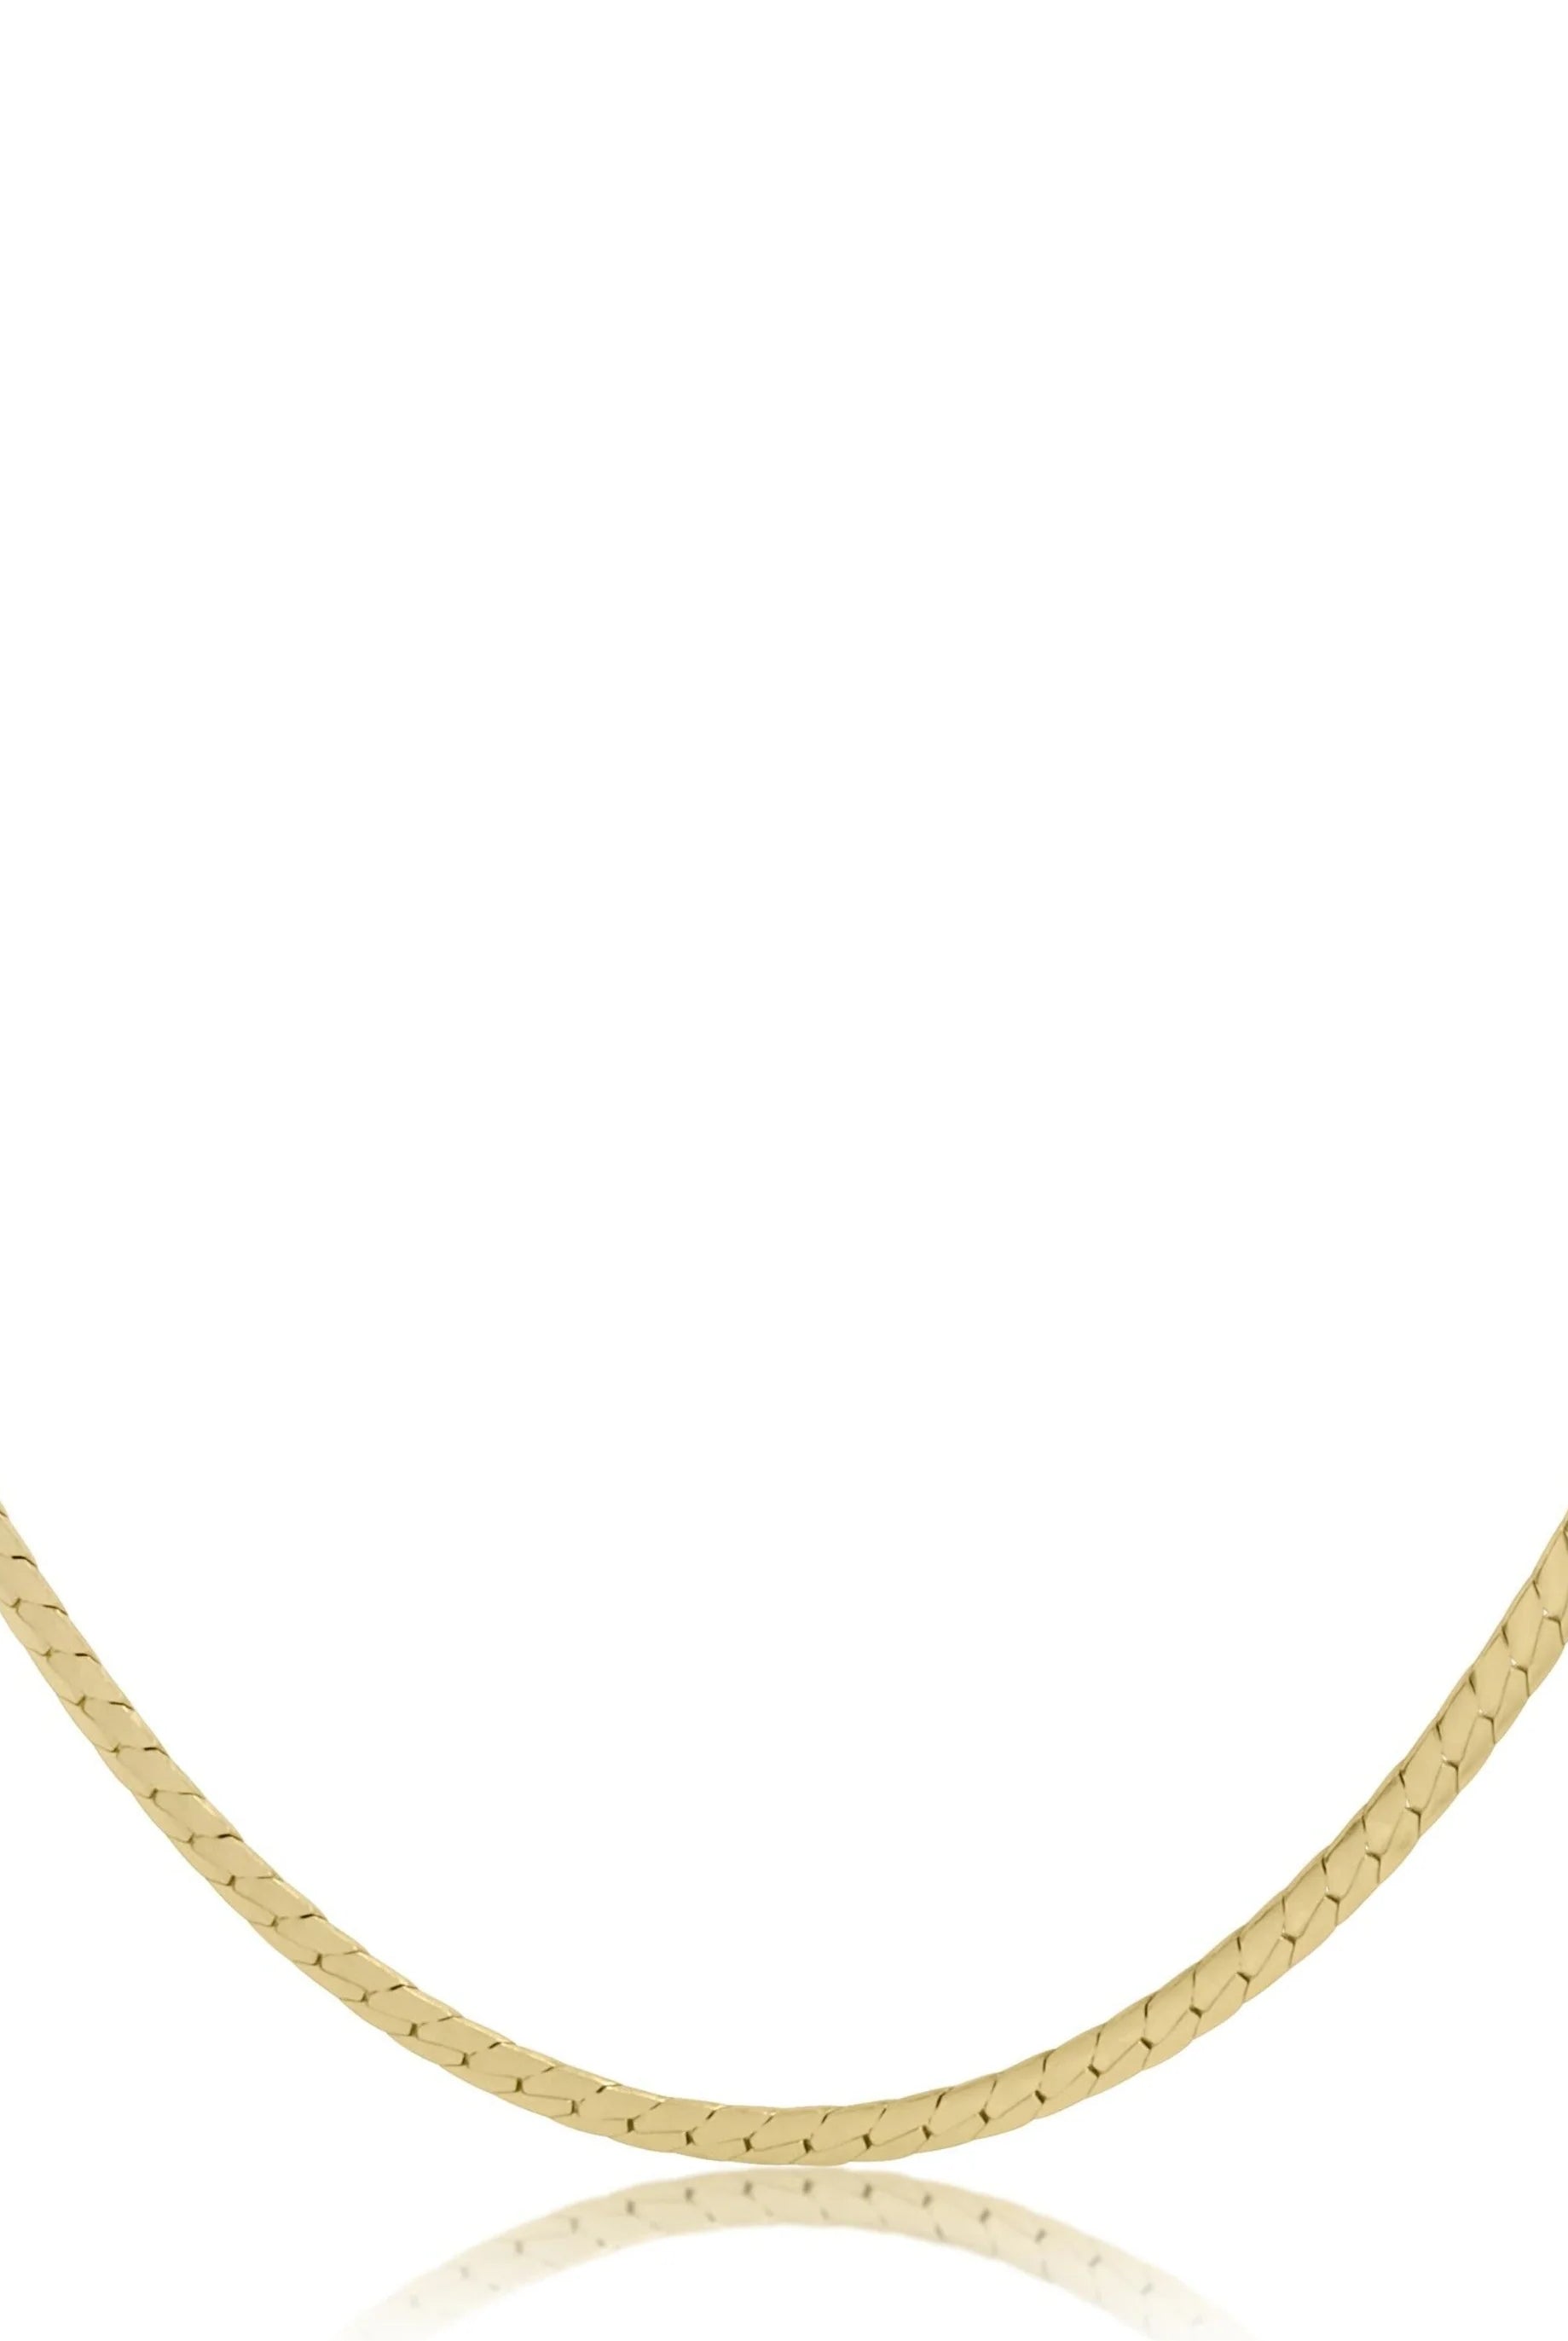 15" Choker Herringbone Chain - Gold-260 eNewton-eNewton-The Lovely Closet, Women's Fashion Boutique in Alexandria, KY